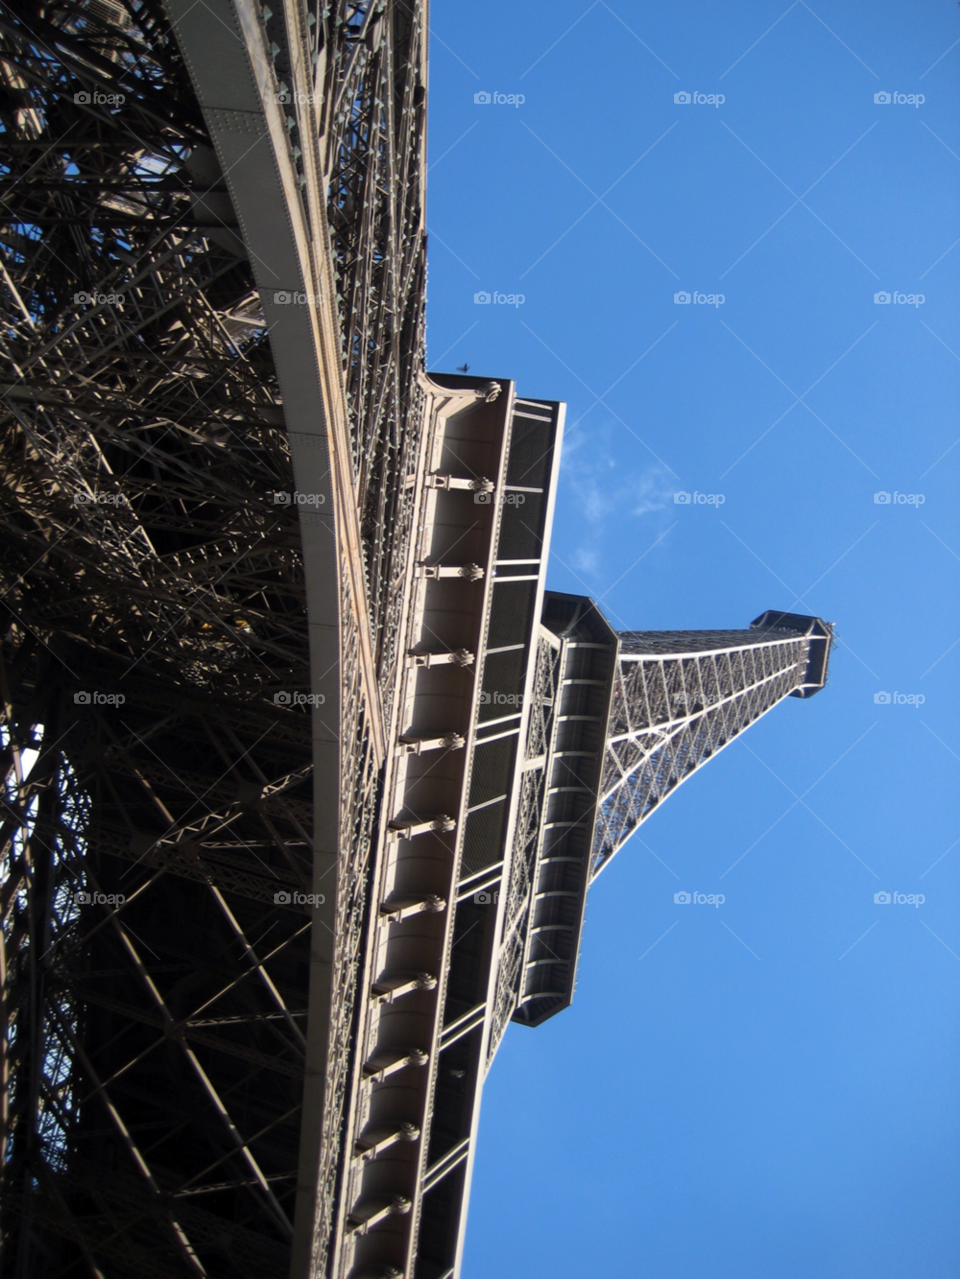 france paris eiffel tower blue sky by Click